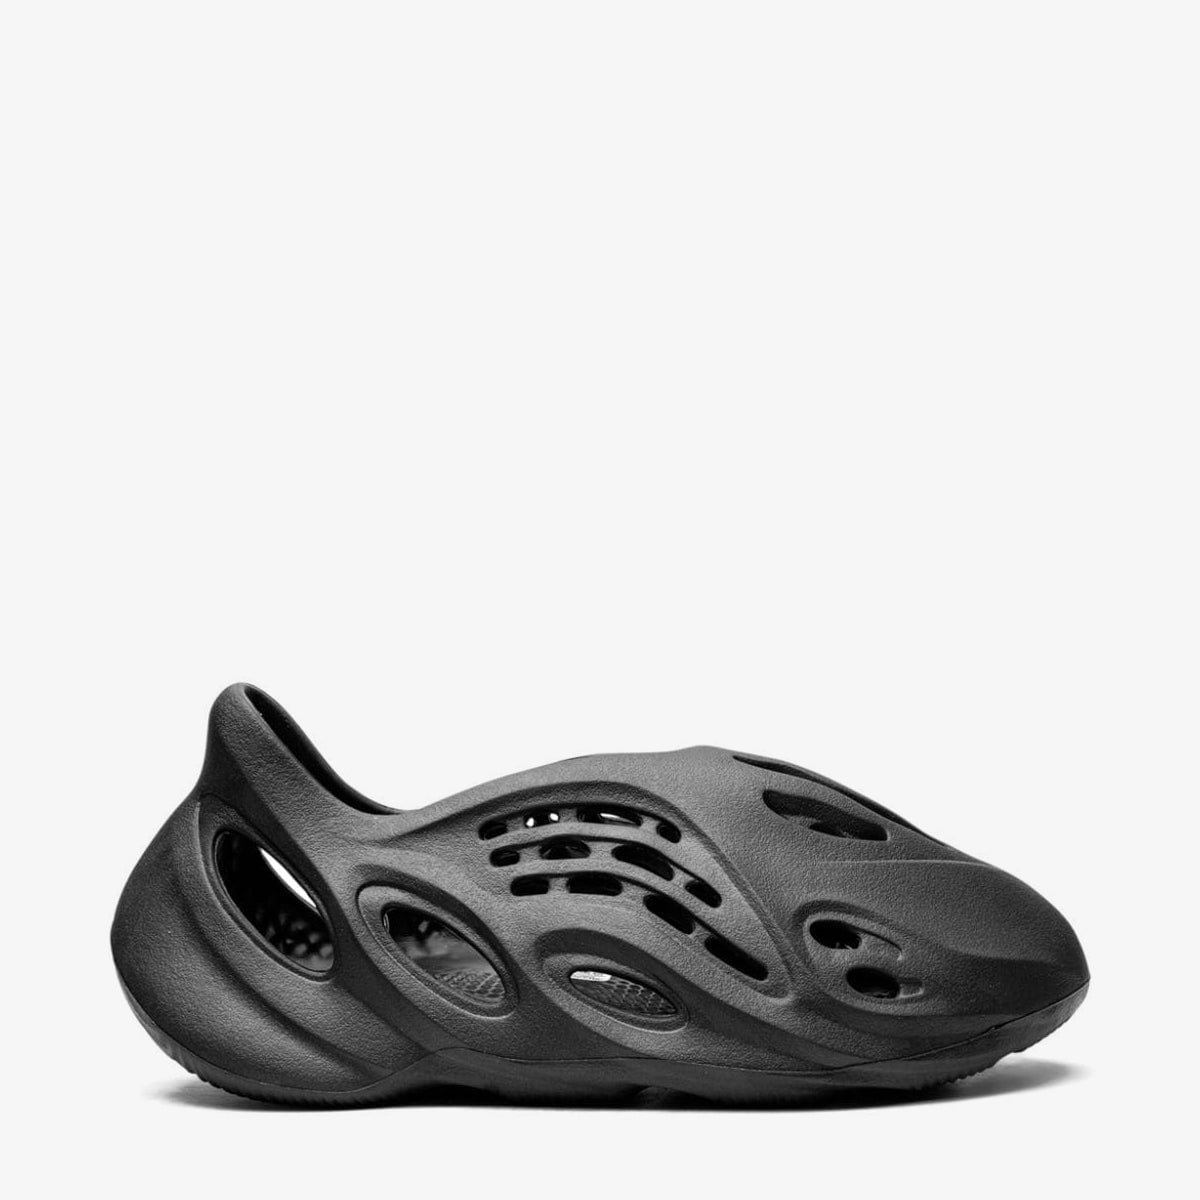 Yeezy Foam RNNR “Onyx” Sneakers adidas